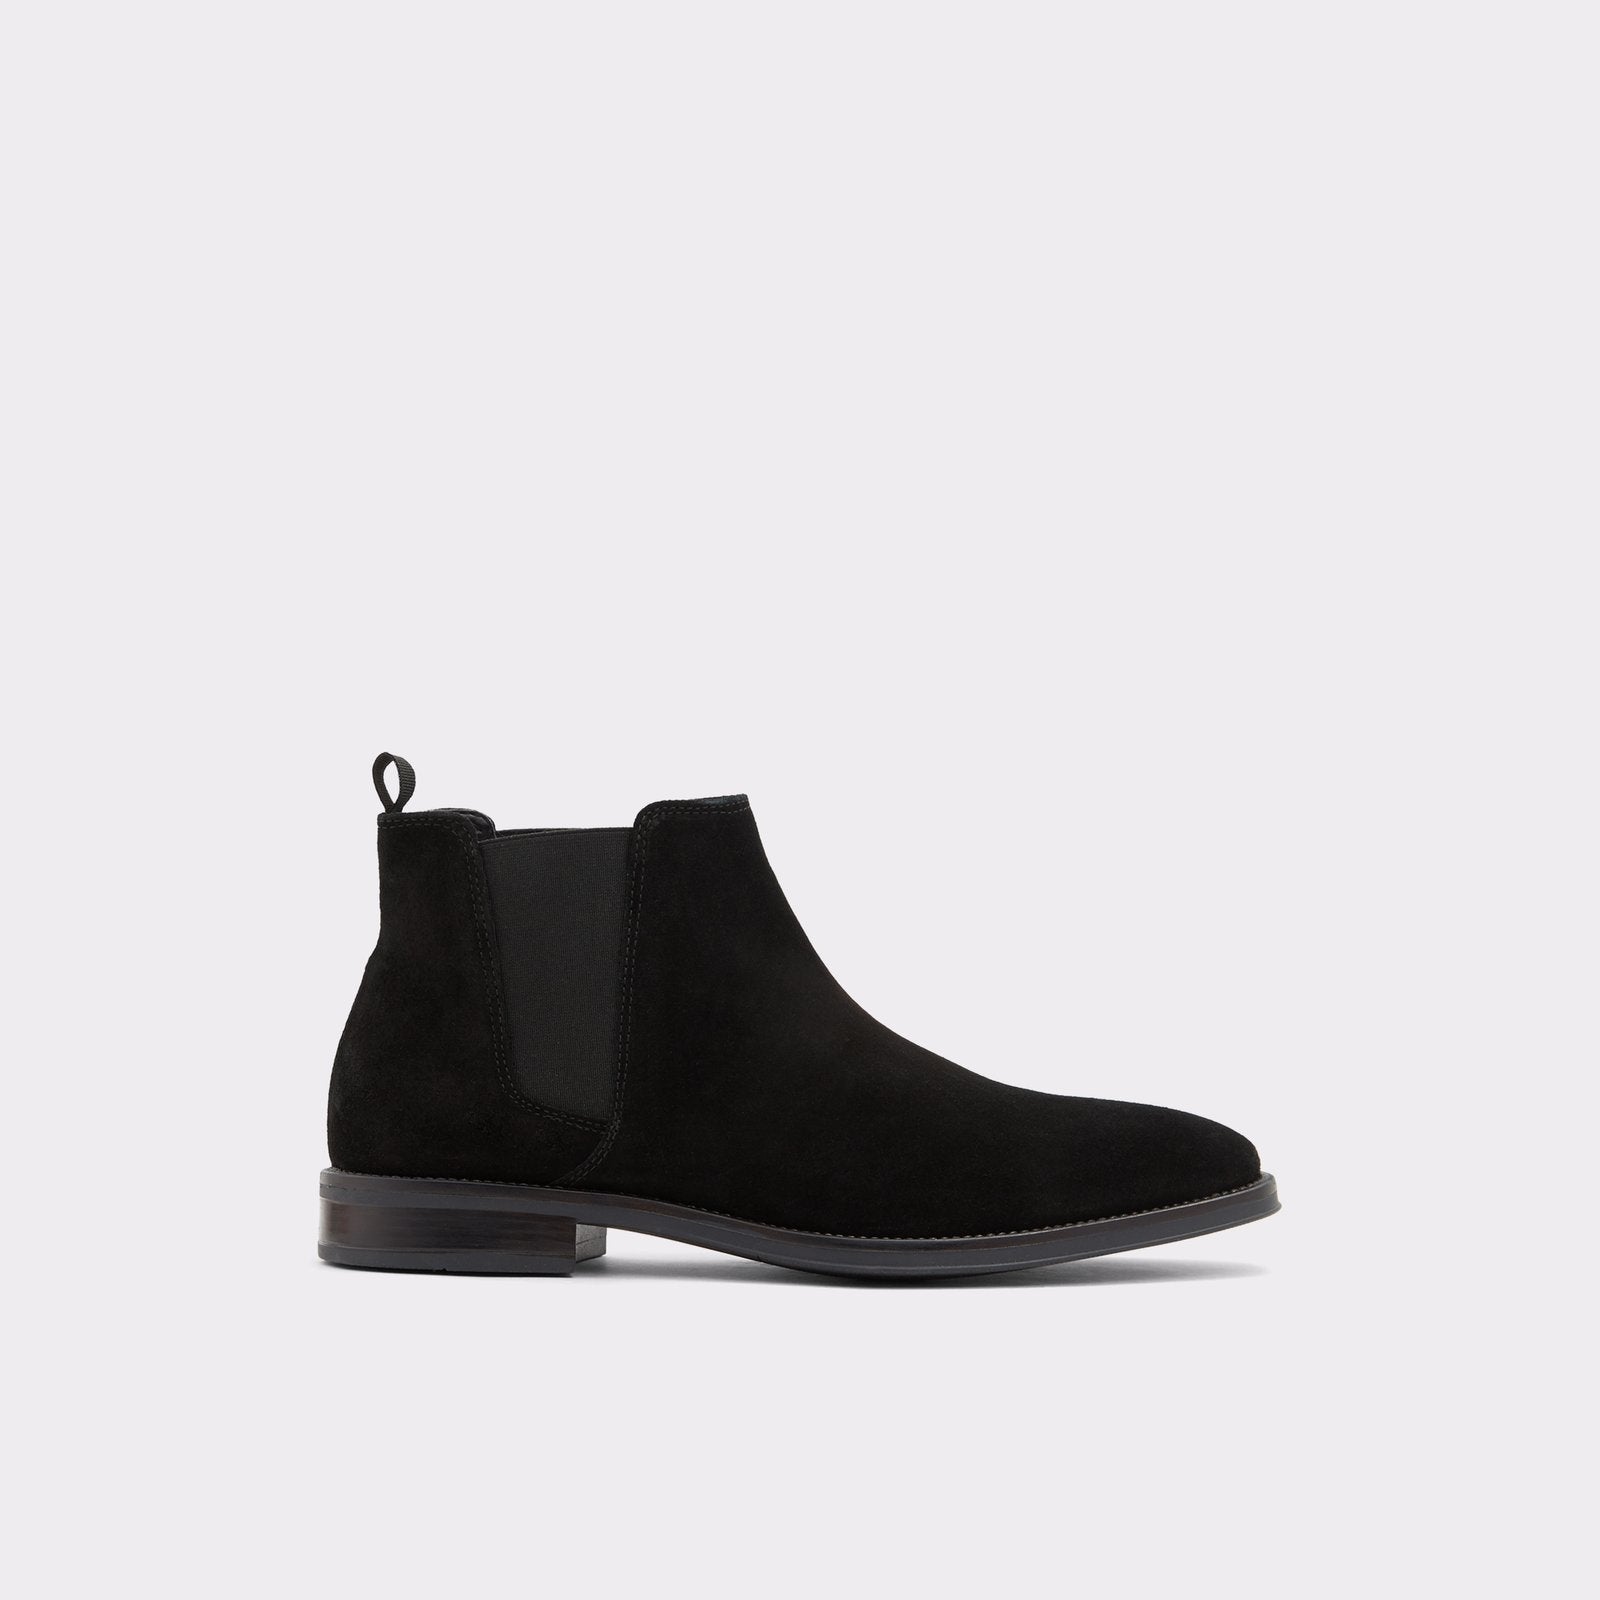 Aldo Men’s Chelsea Boots Gweracien (Black)